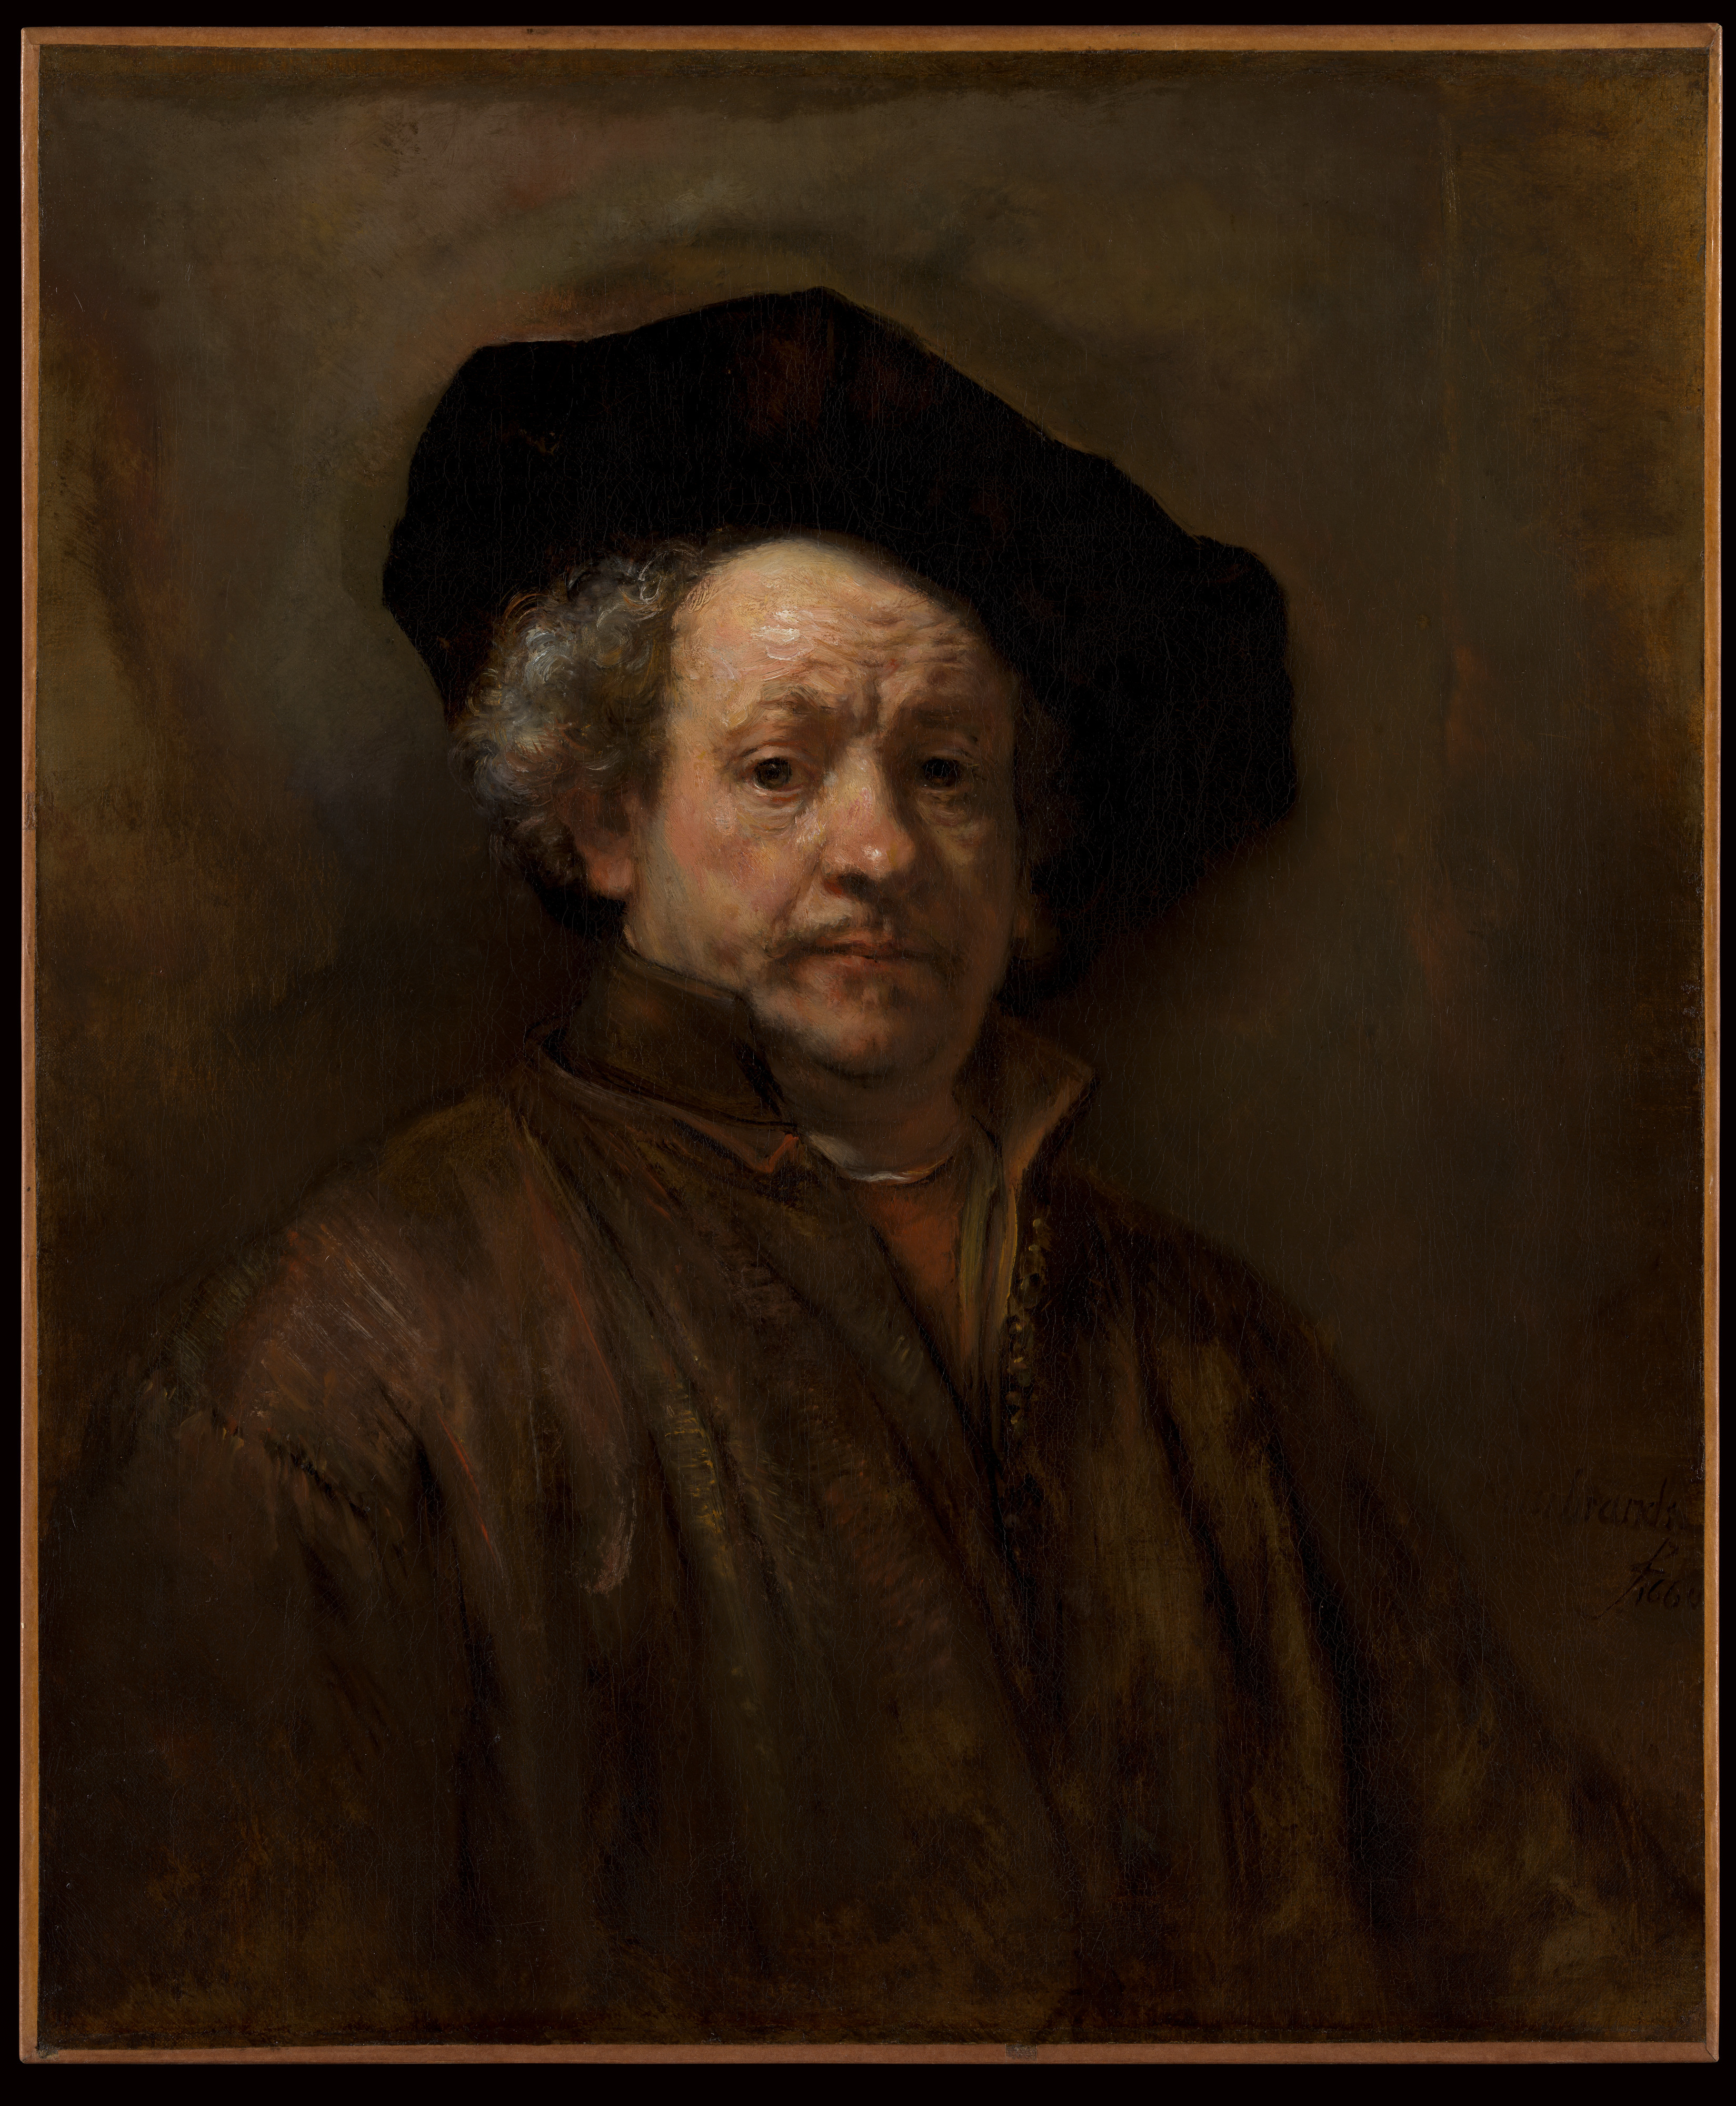 自畫像 by Rembrandt van Rijn - 1660 - 31 5/8 x 26 1/2 in 